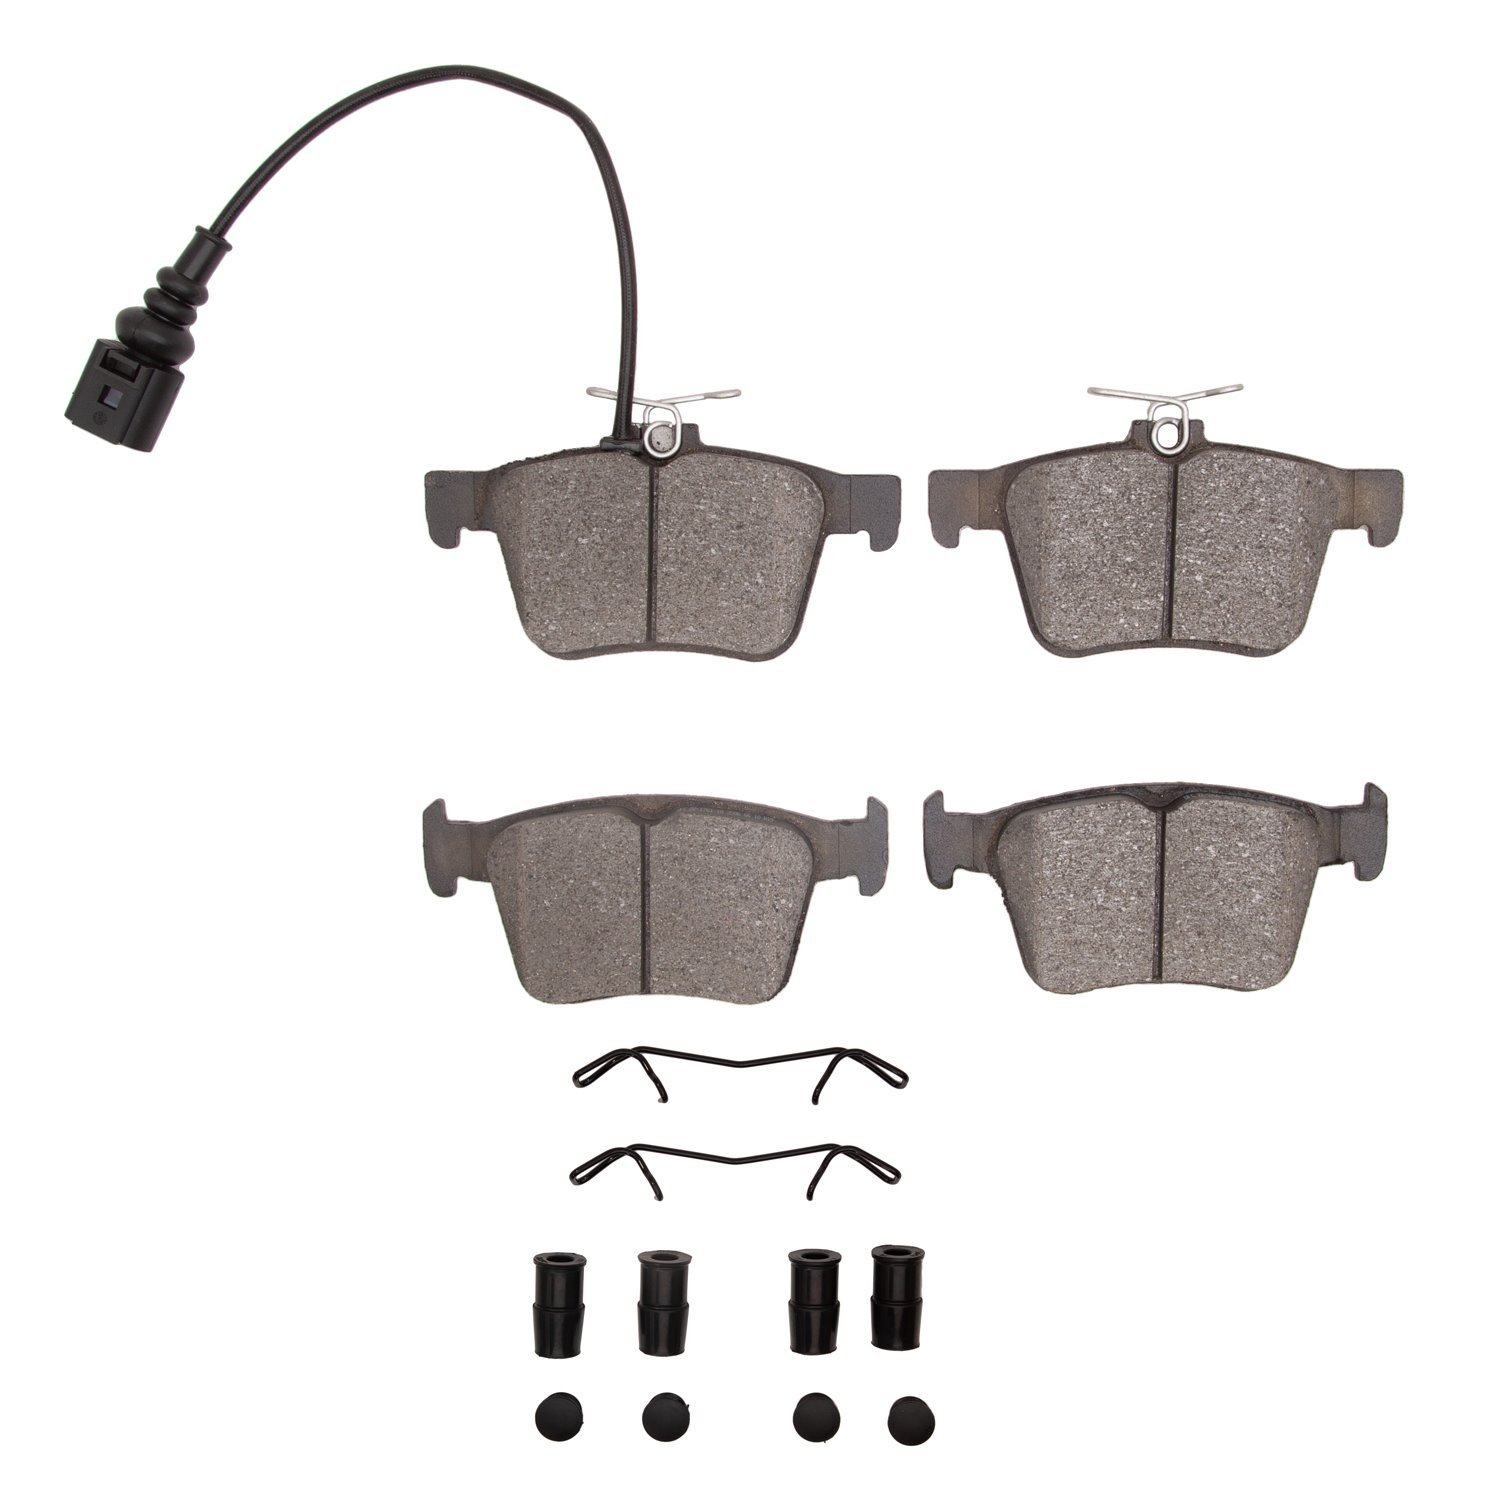 1310-1761-02 3000-Series Ceramic Brake Pads & Hardware Kit, Fits Select Audi/Volkswagen, Position: Rear